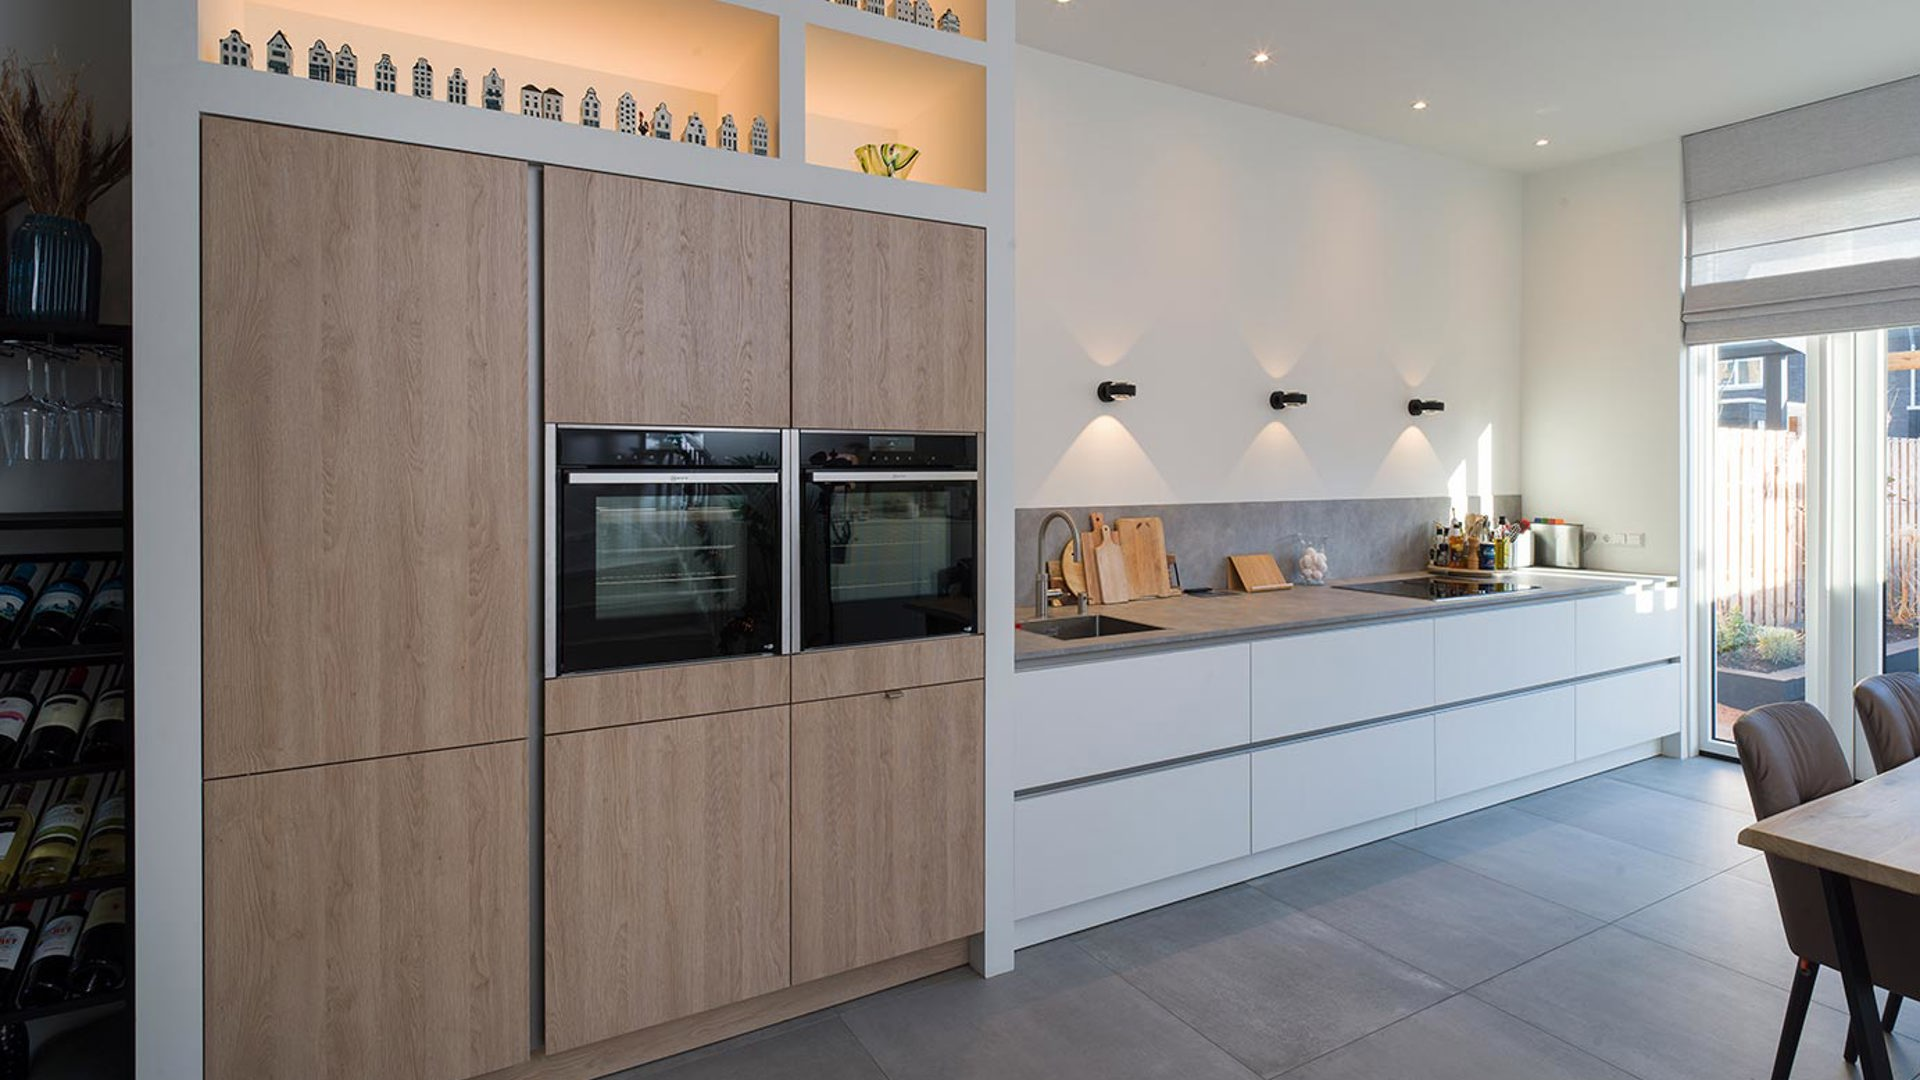 Greeploze SieMatic PURE keuken met houten kastenwand